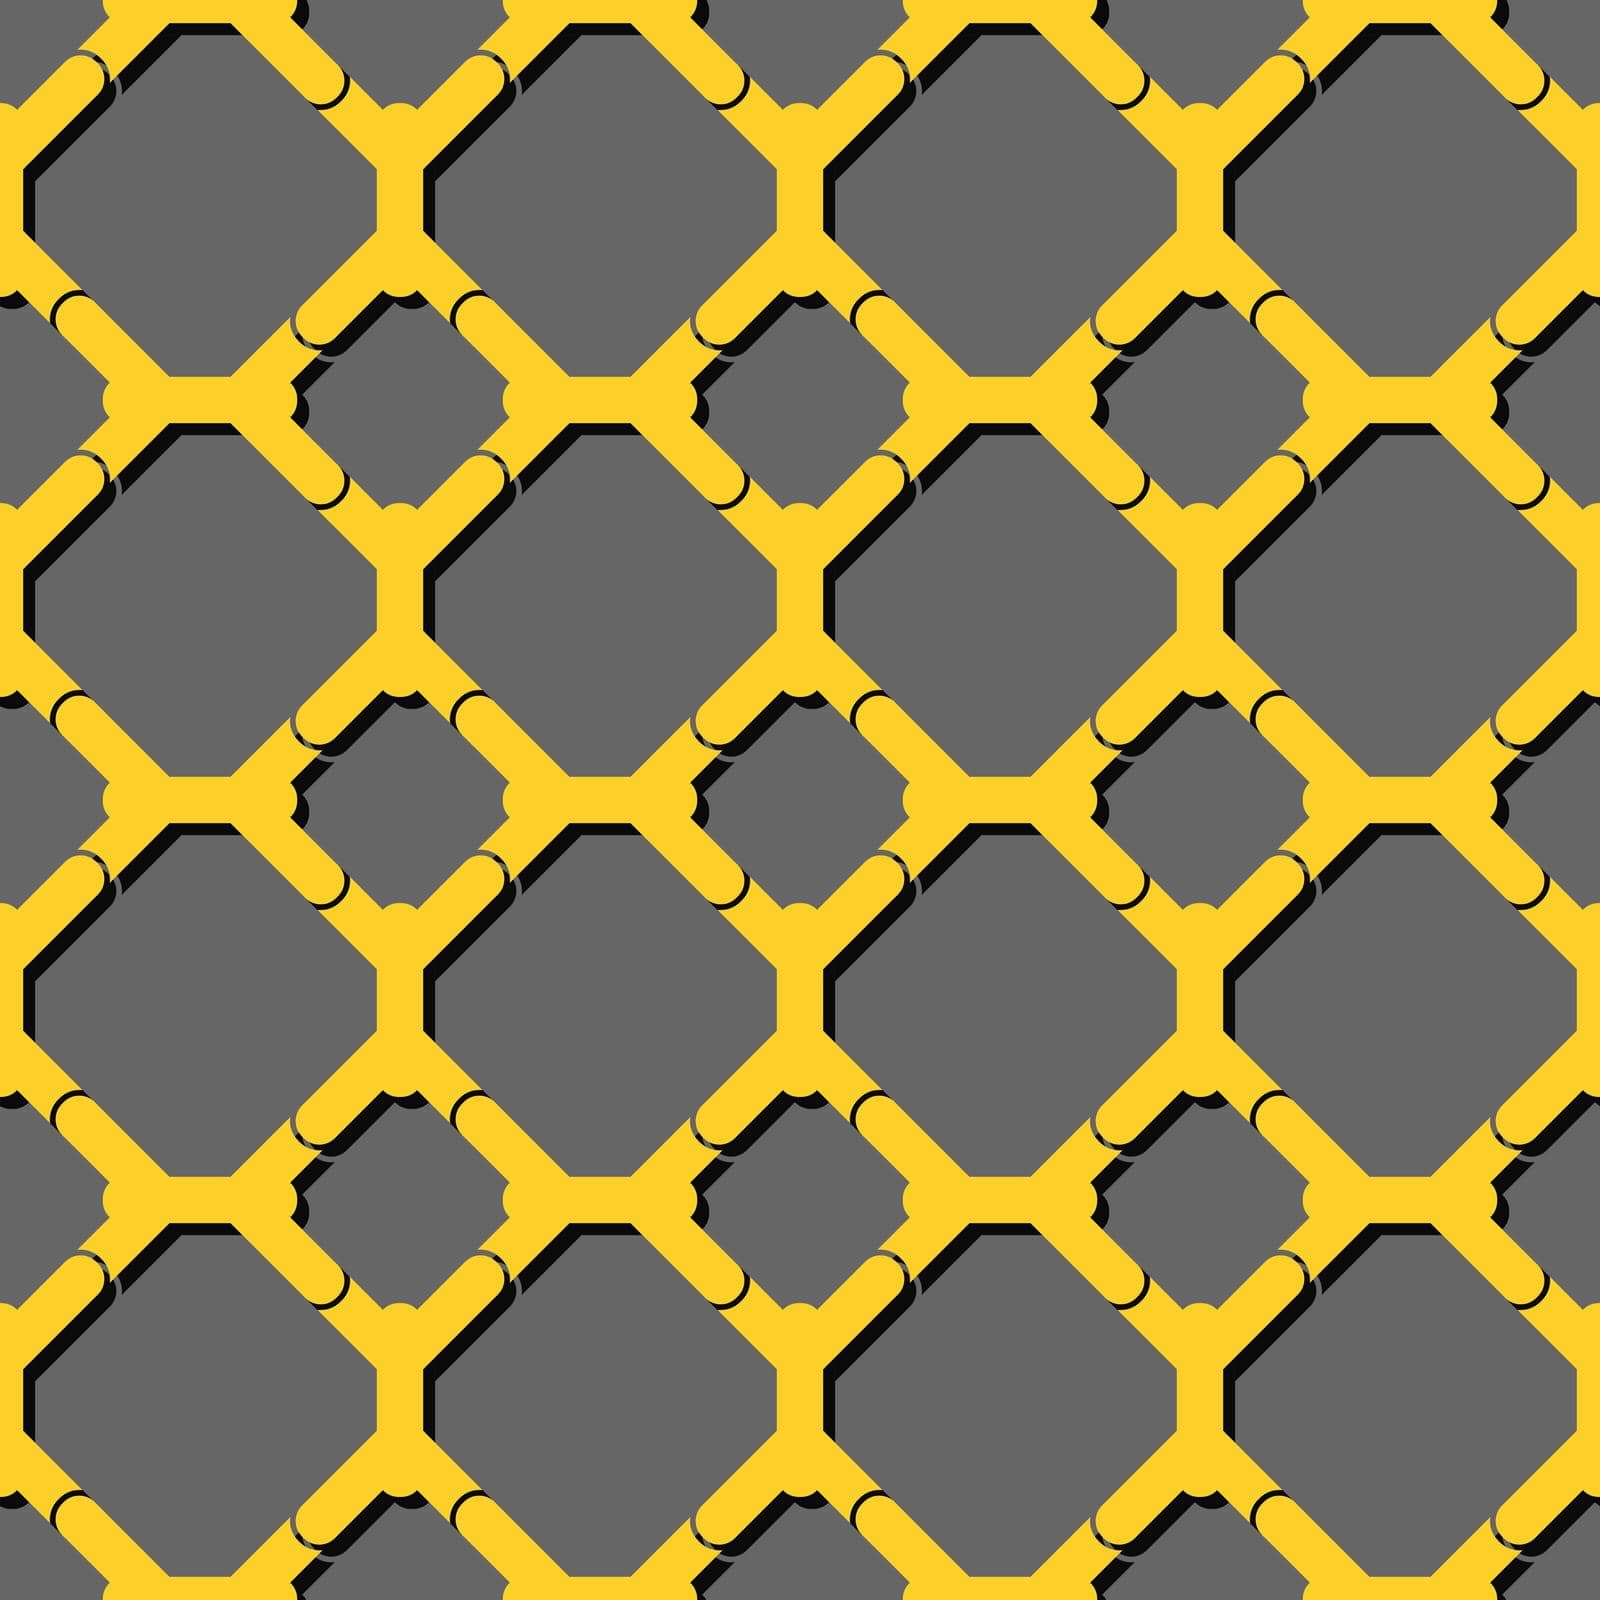 Ornament pattern vector tile